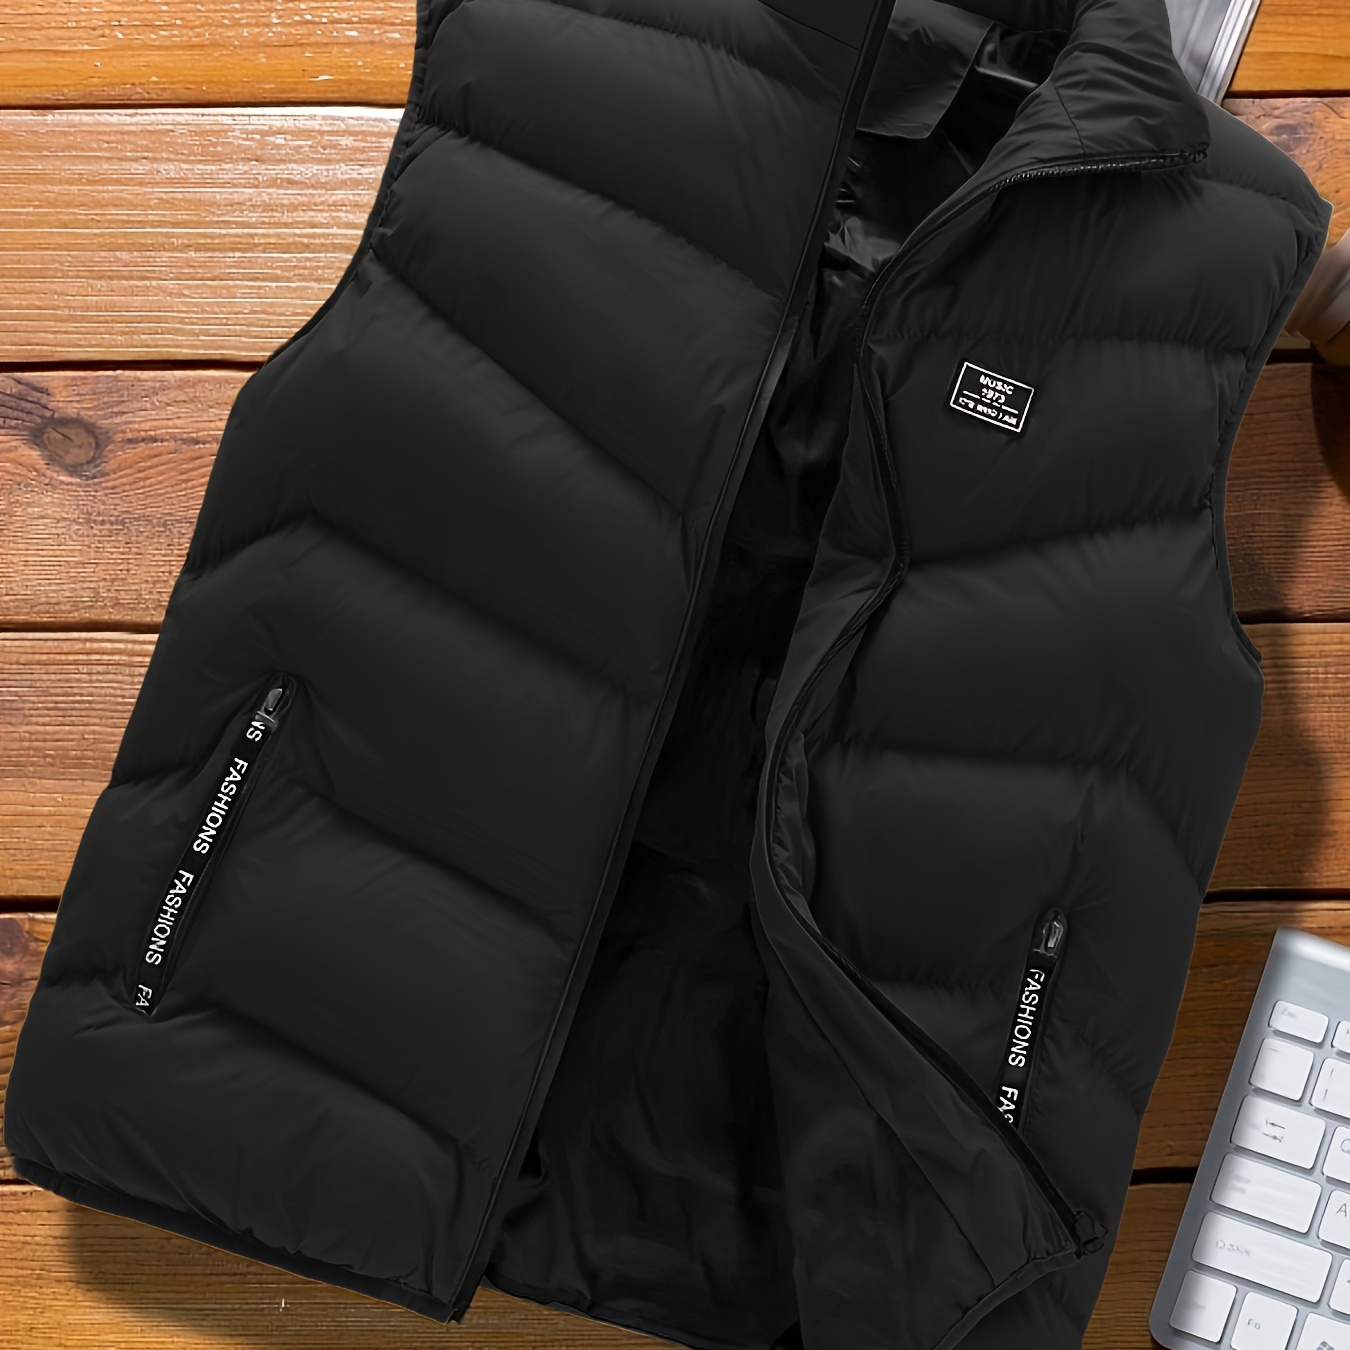 

Warm Winter Vest, Men's Casual Zipper Pockets Stand Collar Zip Up Vest For Fall Winter